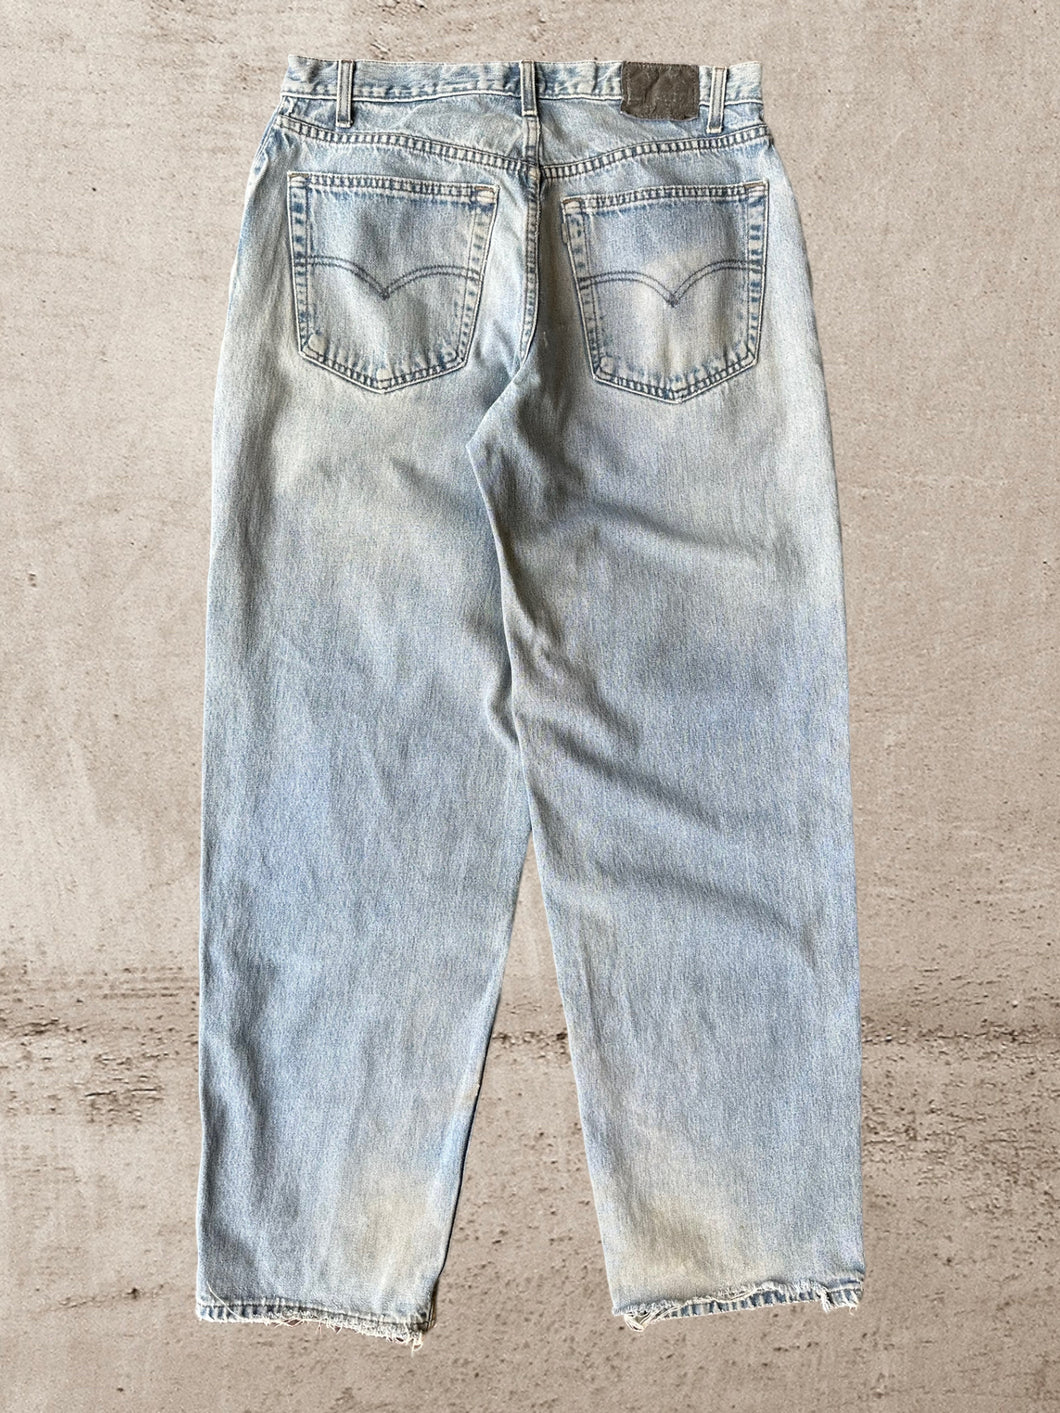 90s Levi Silvertab Baggy Jeans - 32x31